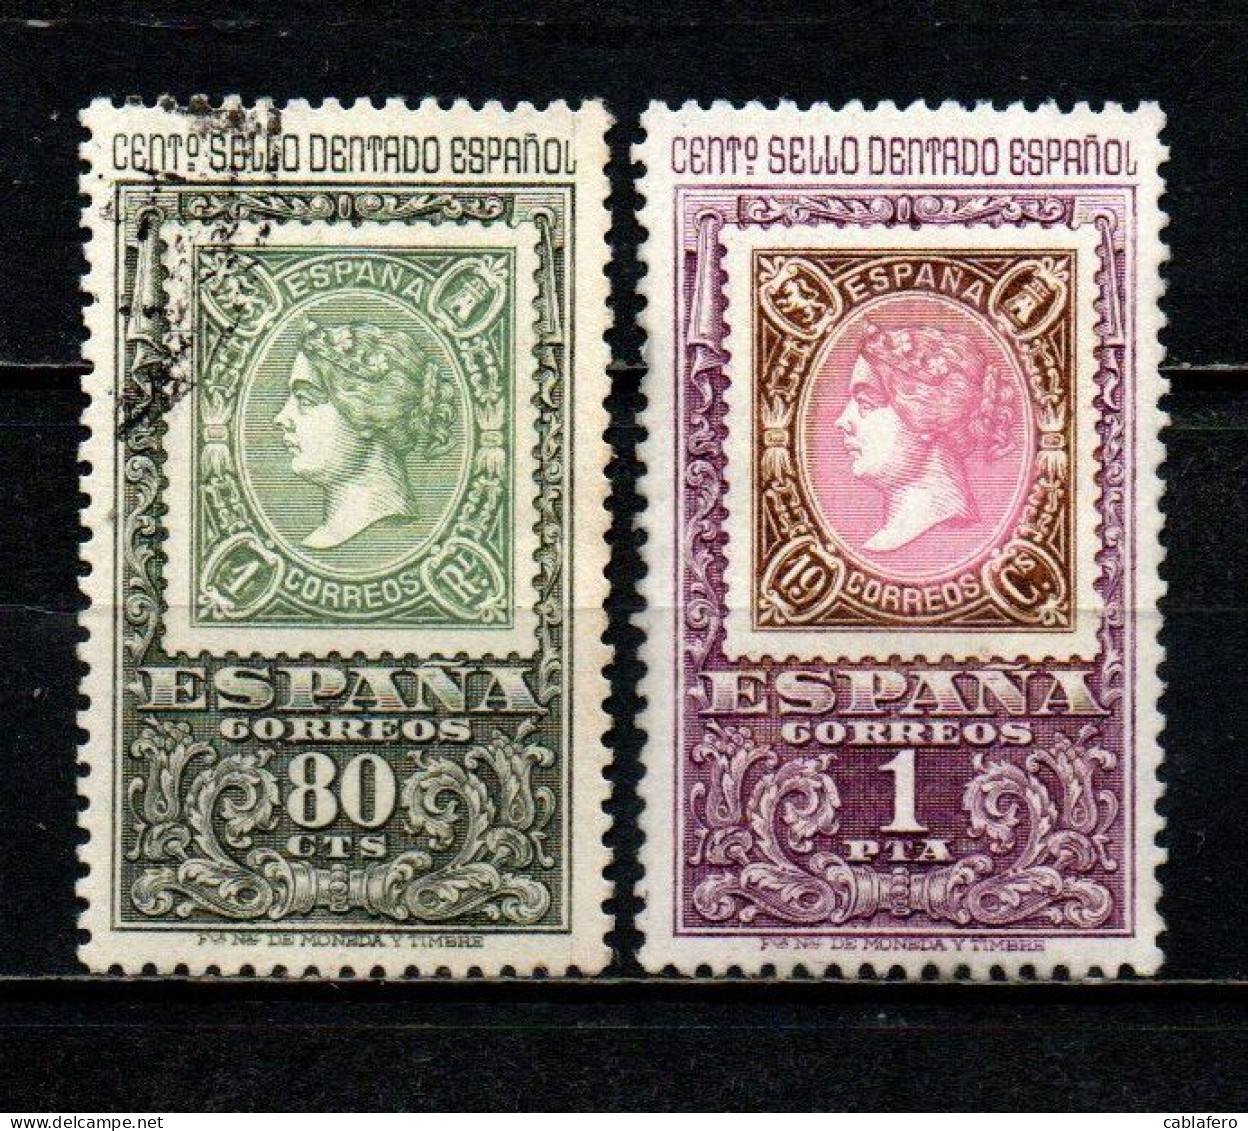 SPAGNA - 1965 - CENTENARIO DEI FRANCOBOLLI SPAGNOLI DENTELLATI - USATI - Used Stamps